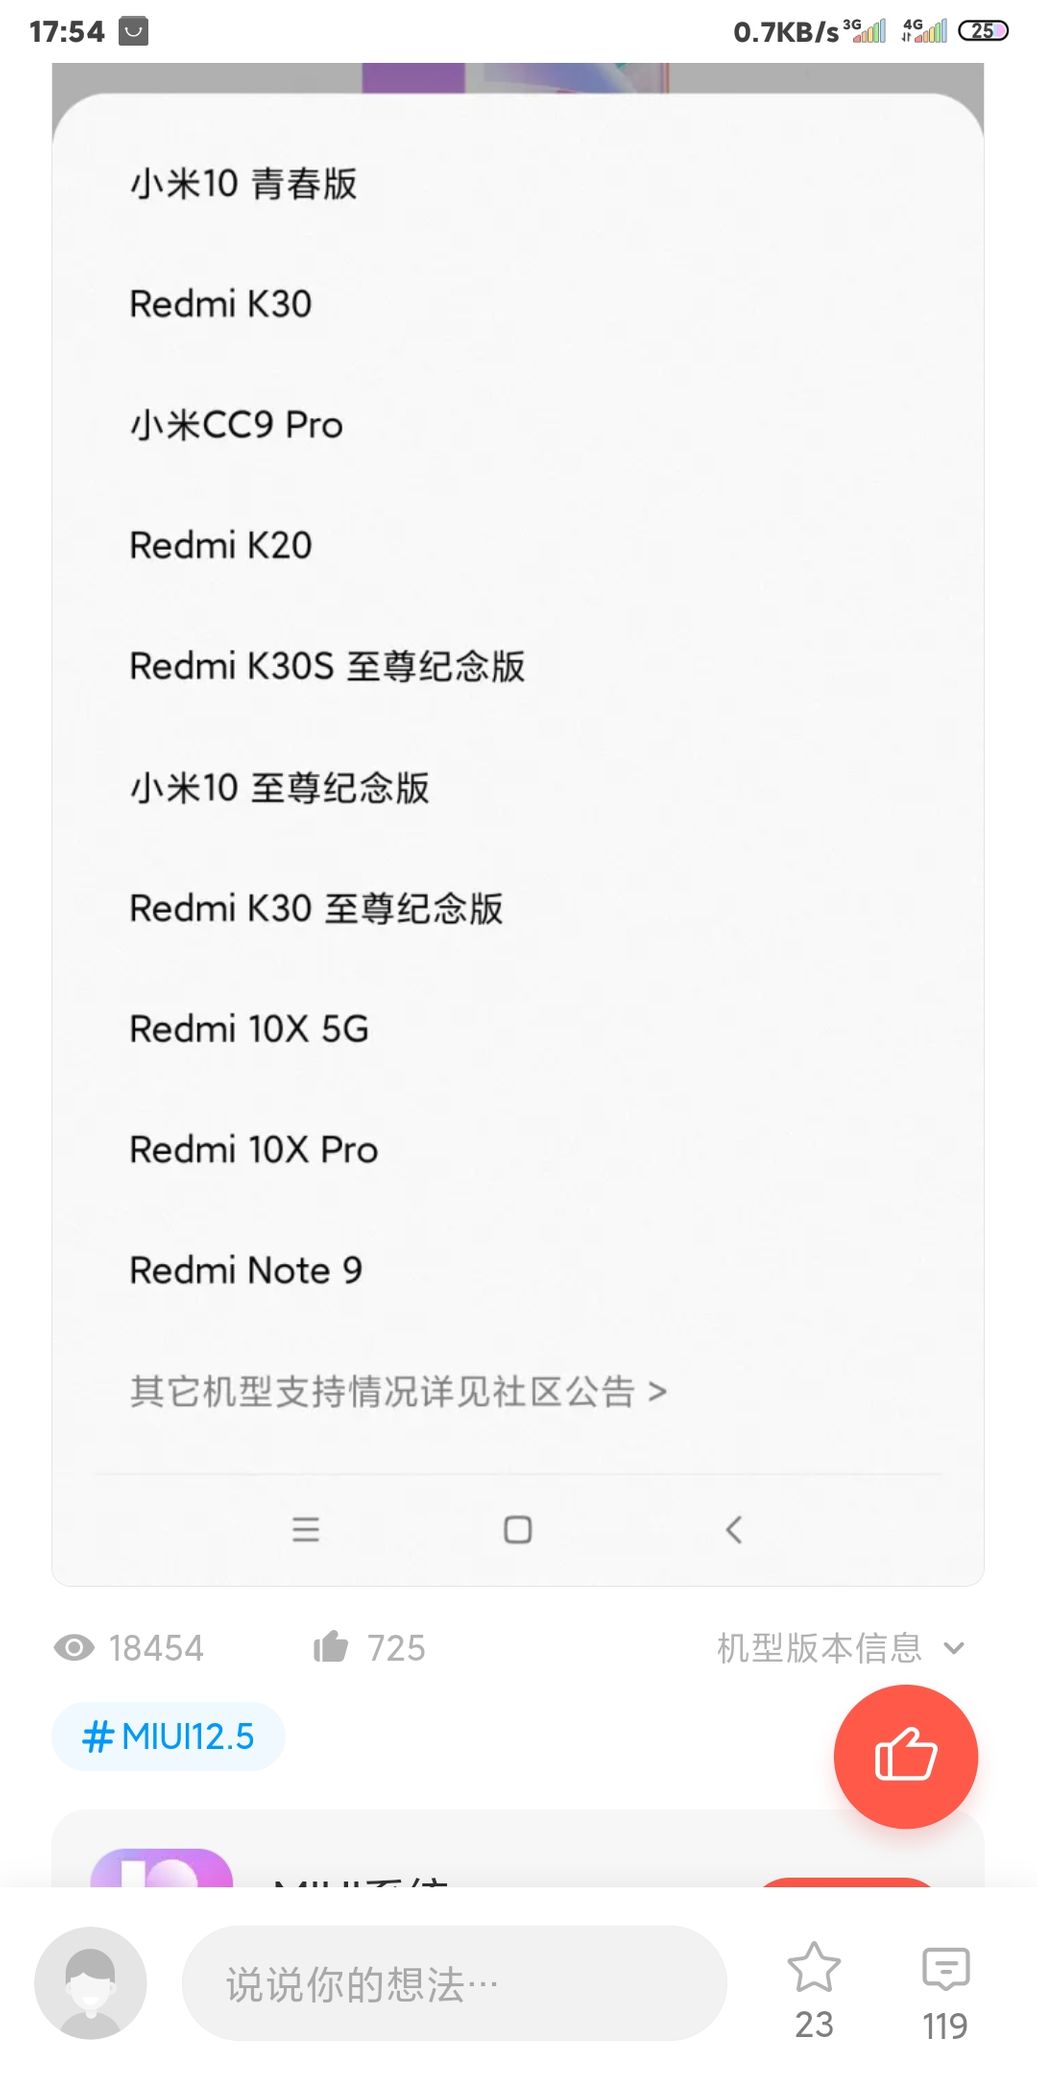 list of Xiaomi phones eligible for the MIUI 12.5 beta testing program